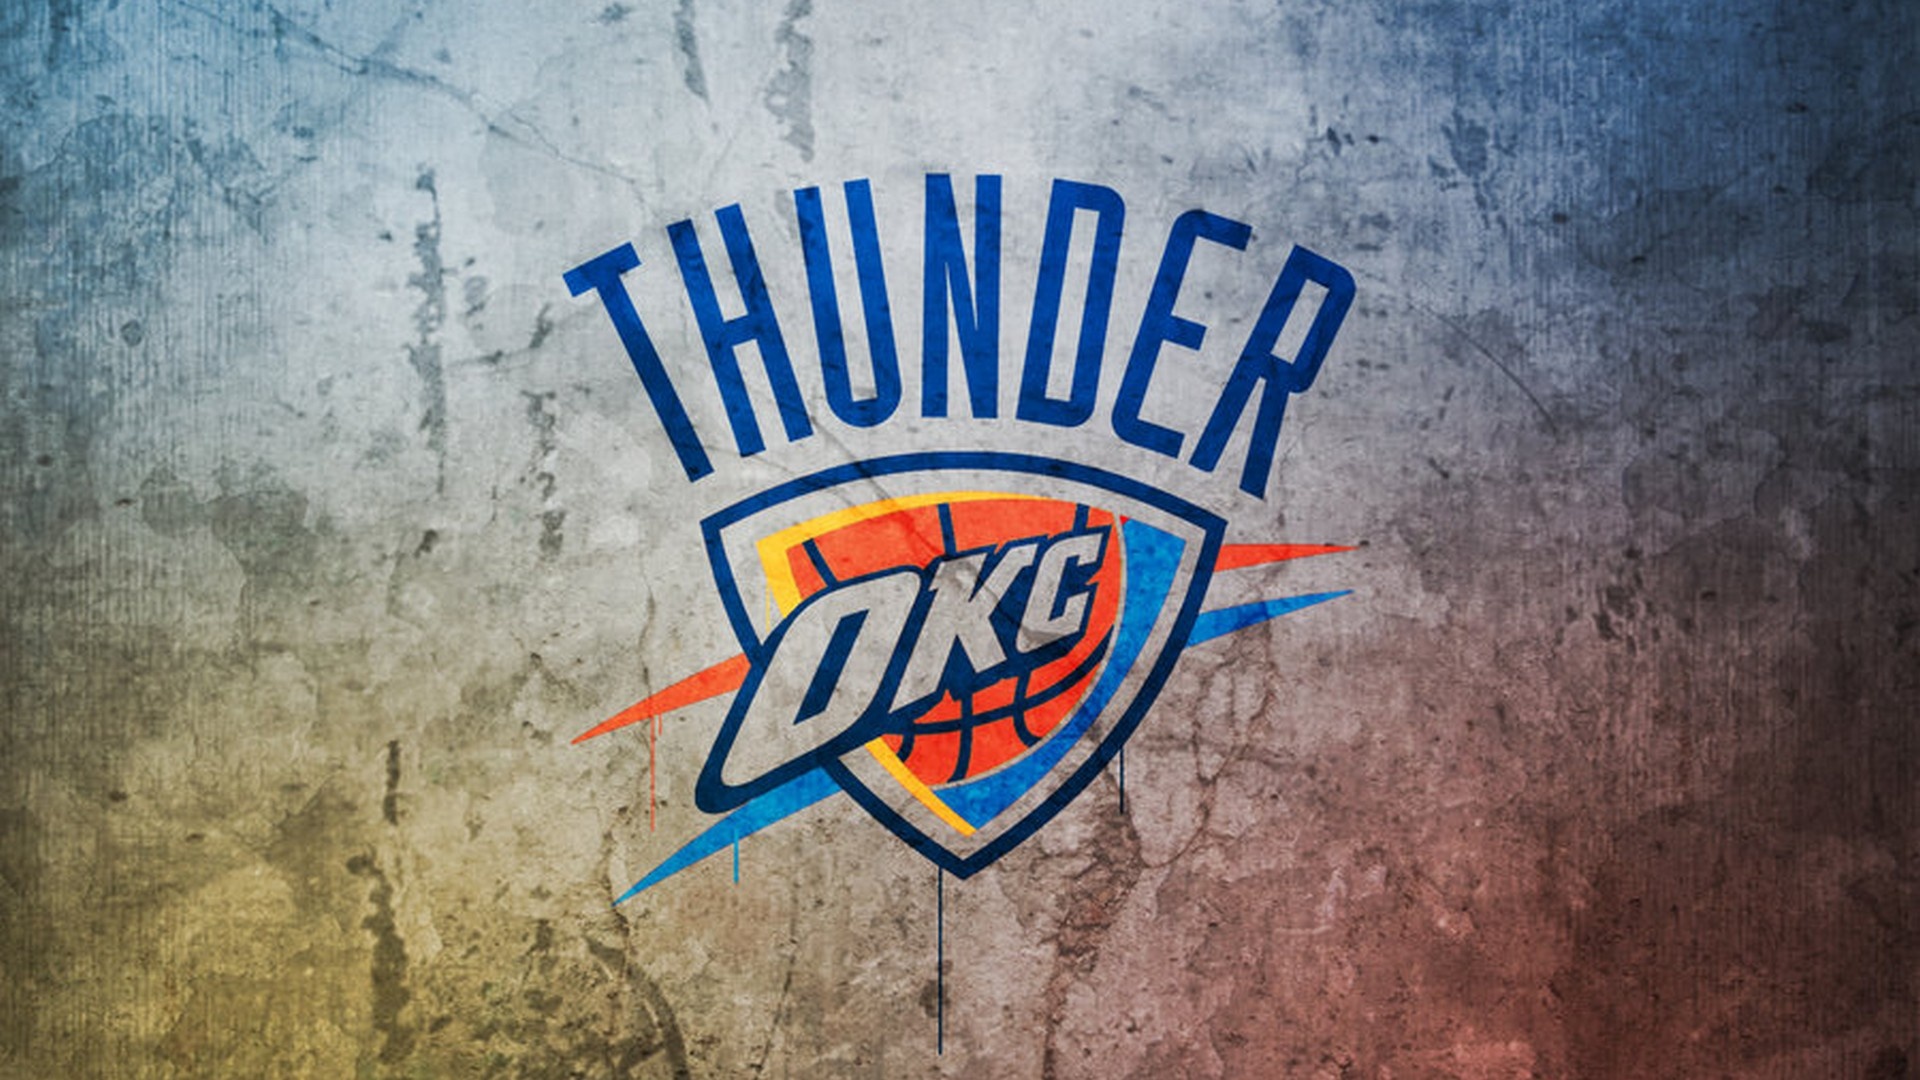 Oklahoma City Thunder, Desktop wallpapers, Basketball wallpaper, Sports team, 1920x1080 Full HD Desktop